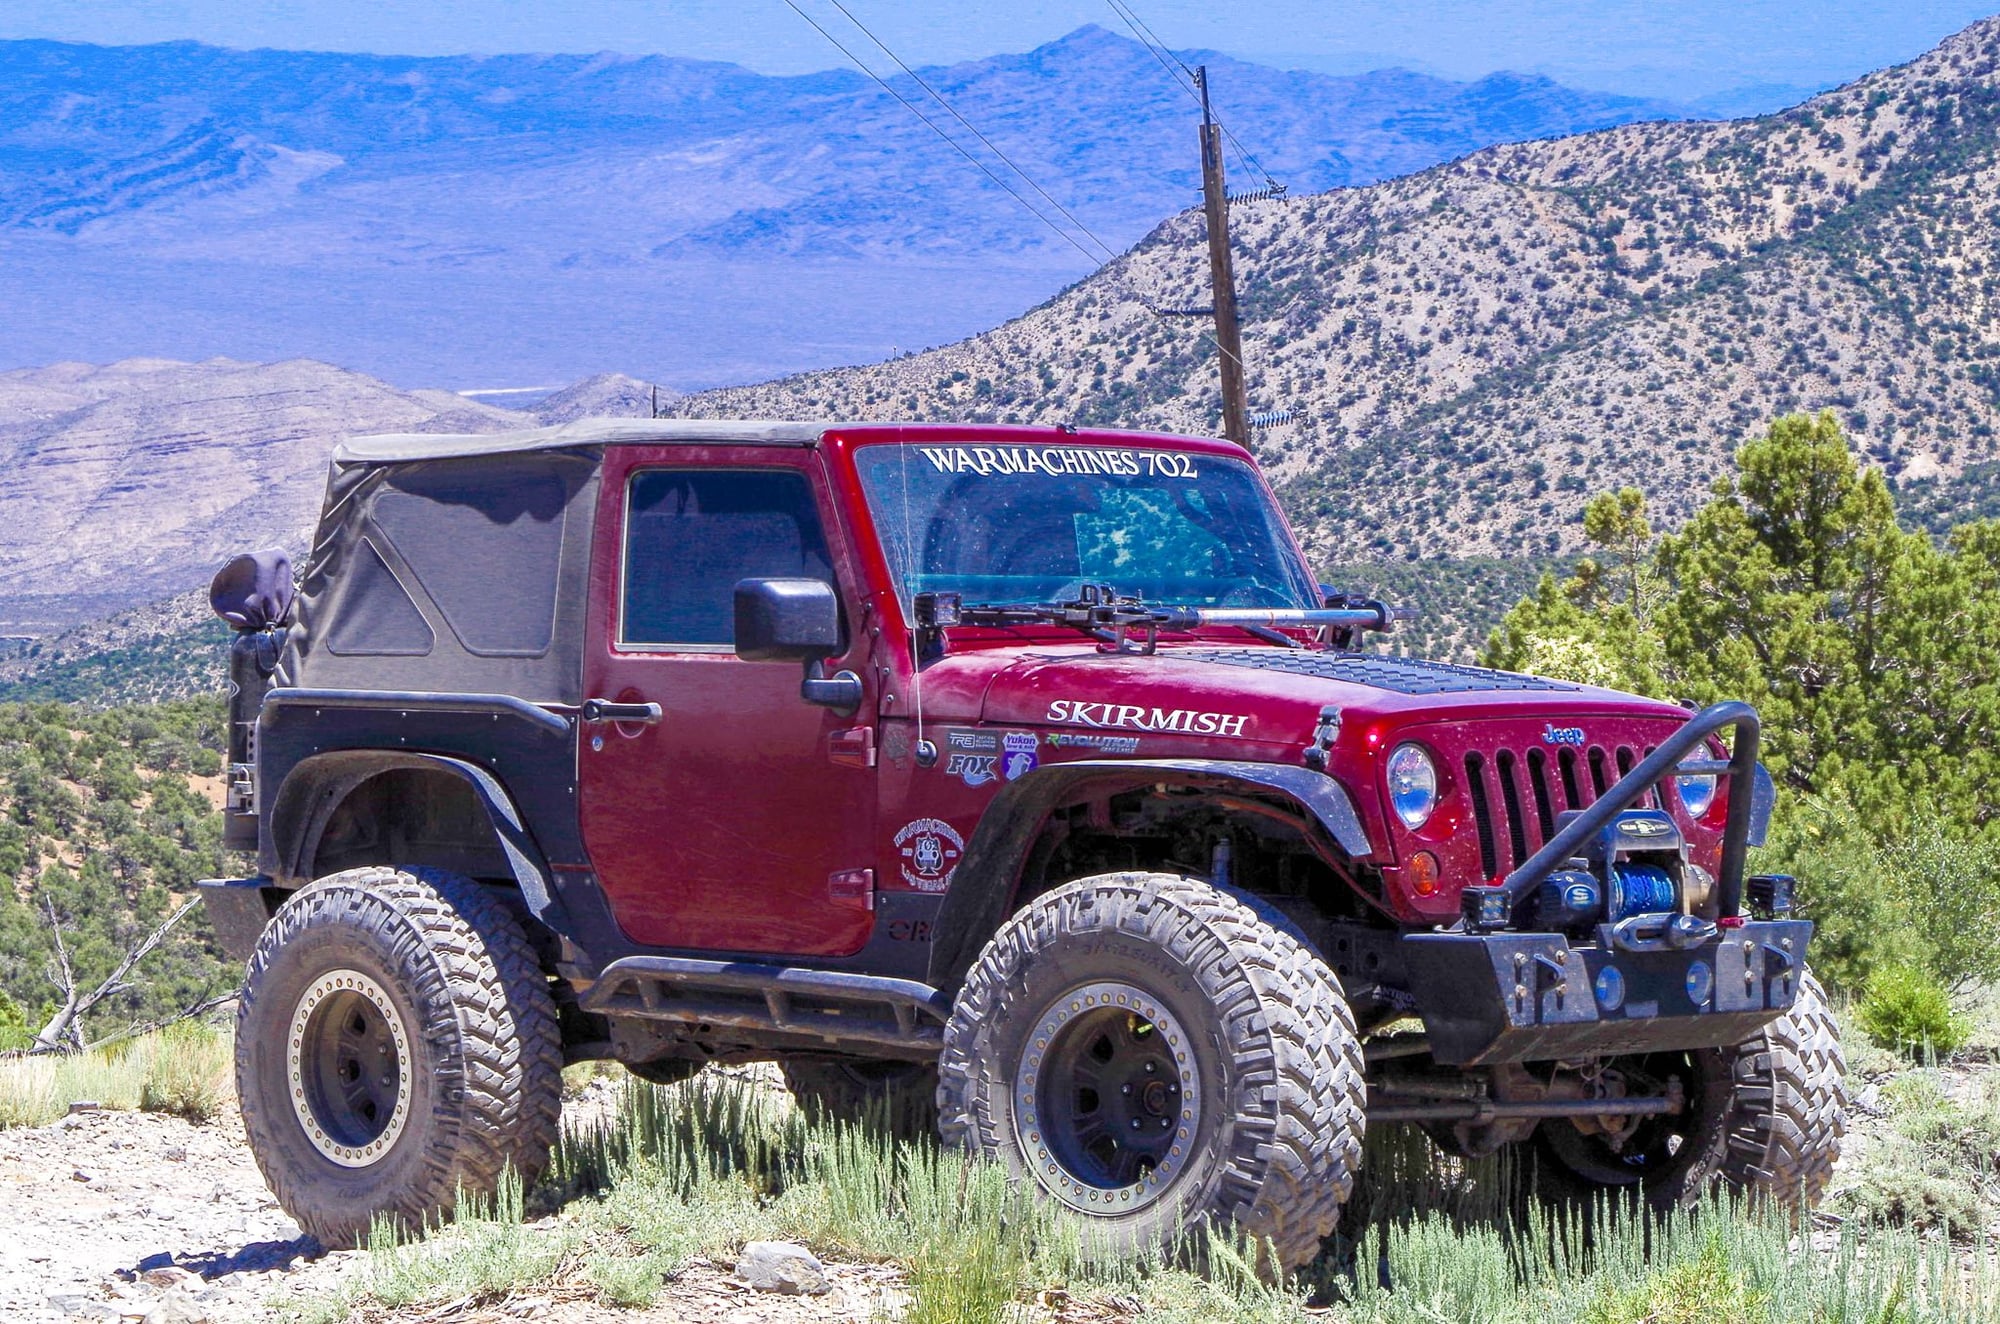 2012 Jeep Wrangler - 2012 JK Fully Built Rock Crawler - Used - VIN 1C4AJWAG3CL102248 - 60,500 Miles - 6 cyl - 4WD - Manual - SUV - Red - Las Vegas, NV 89178, United States